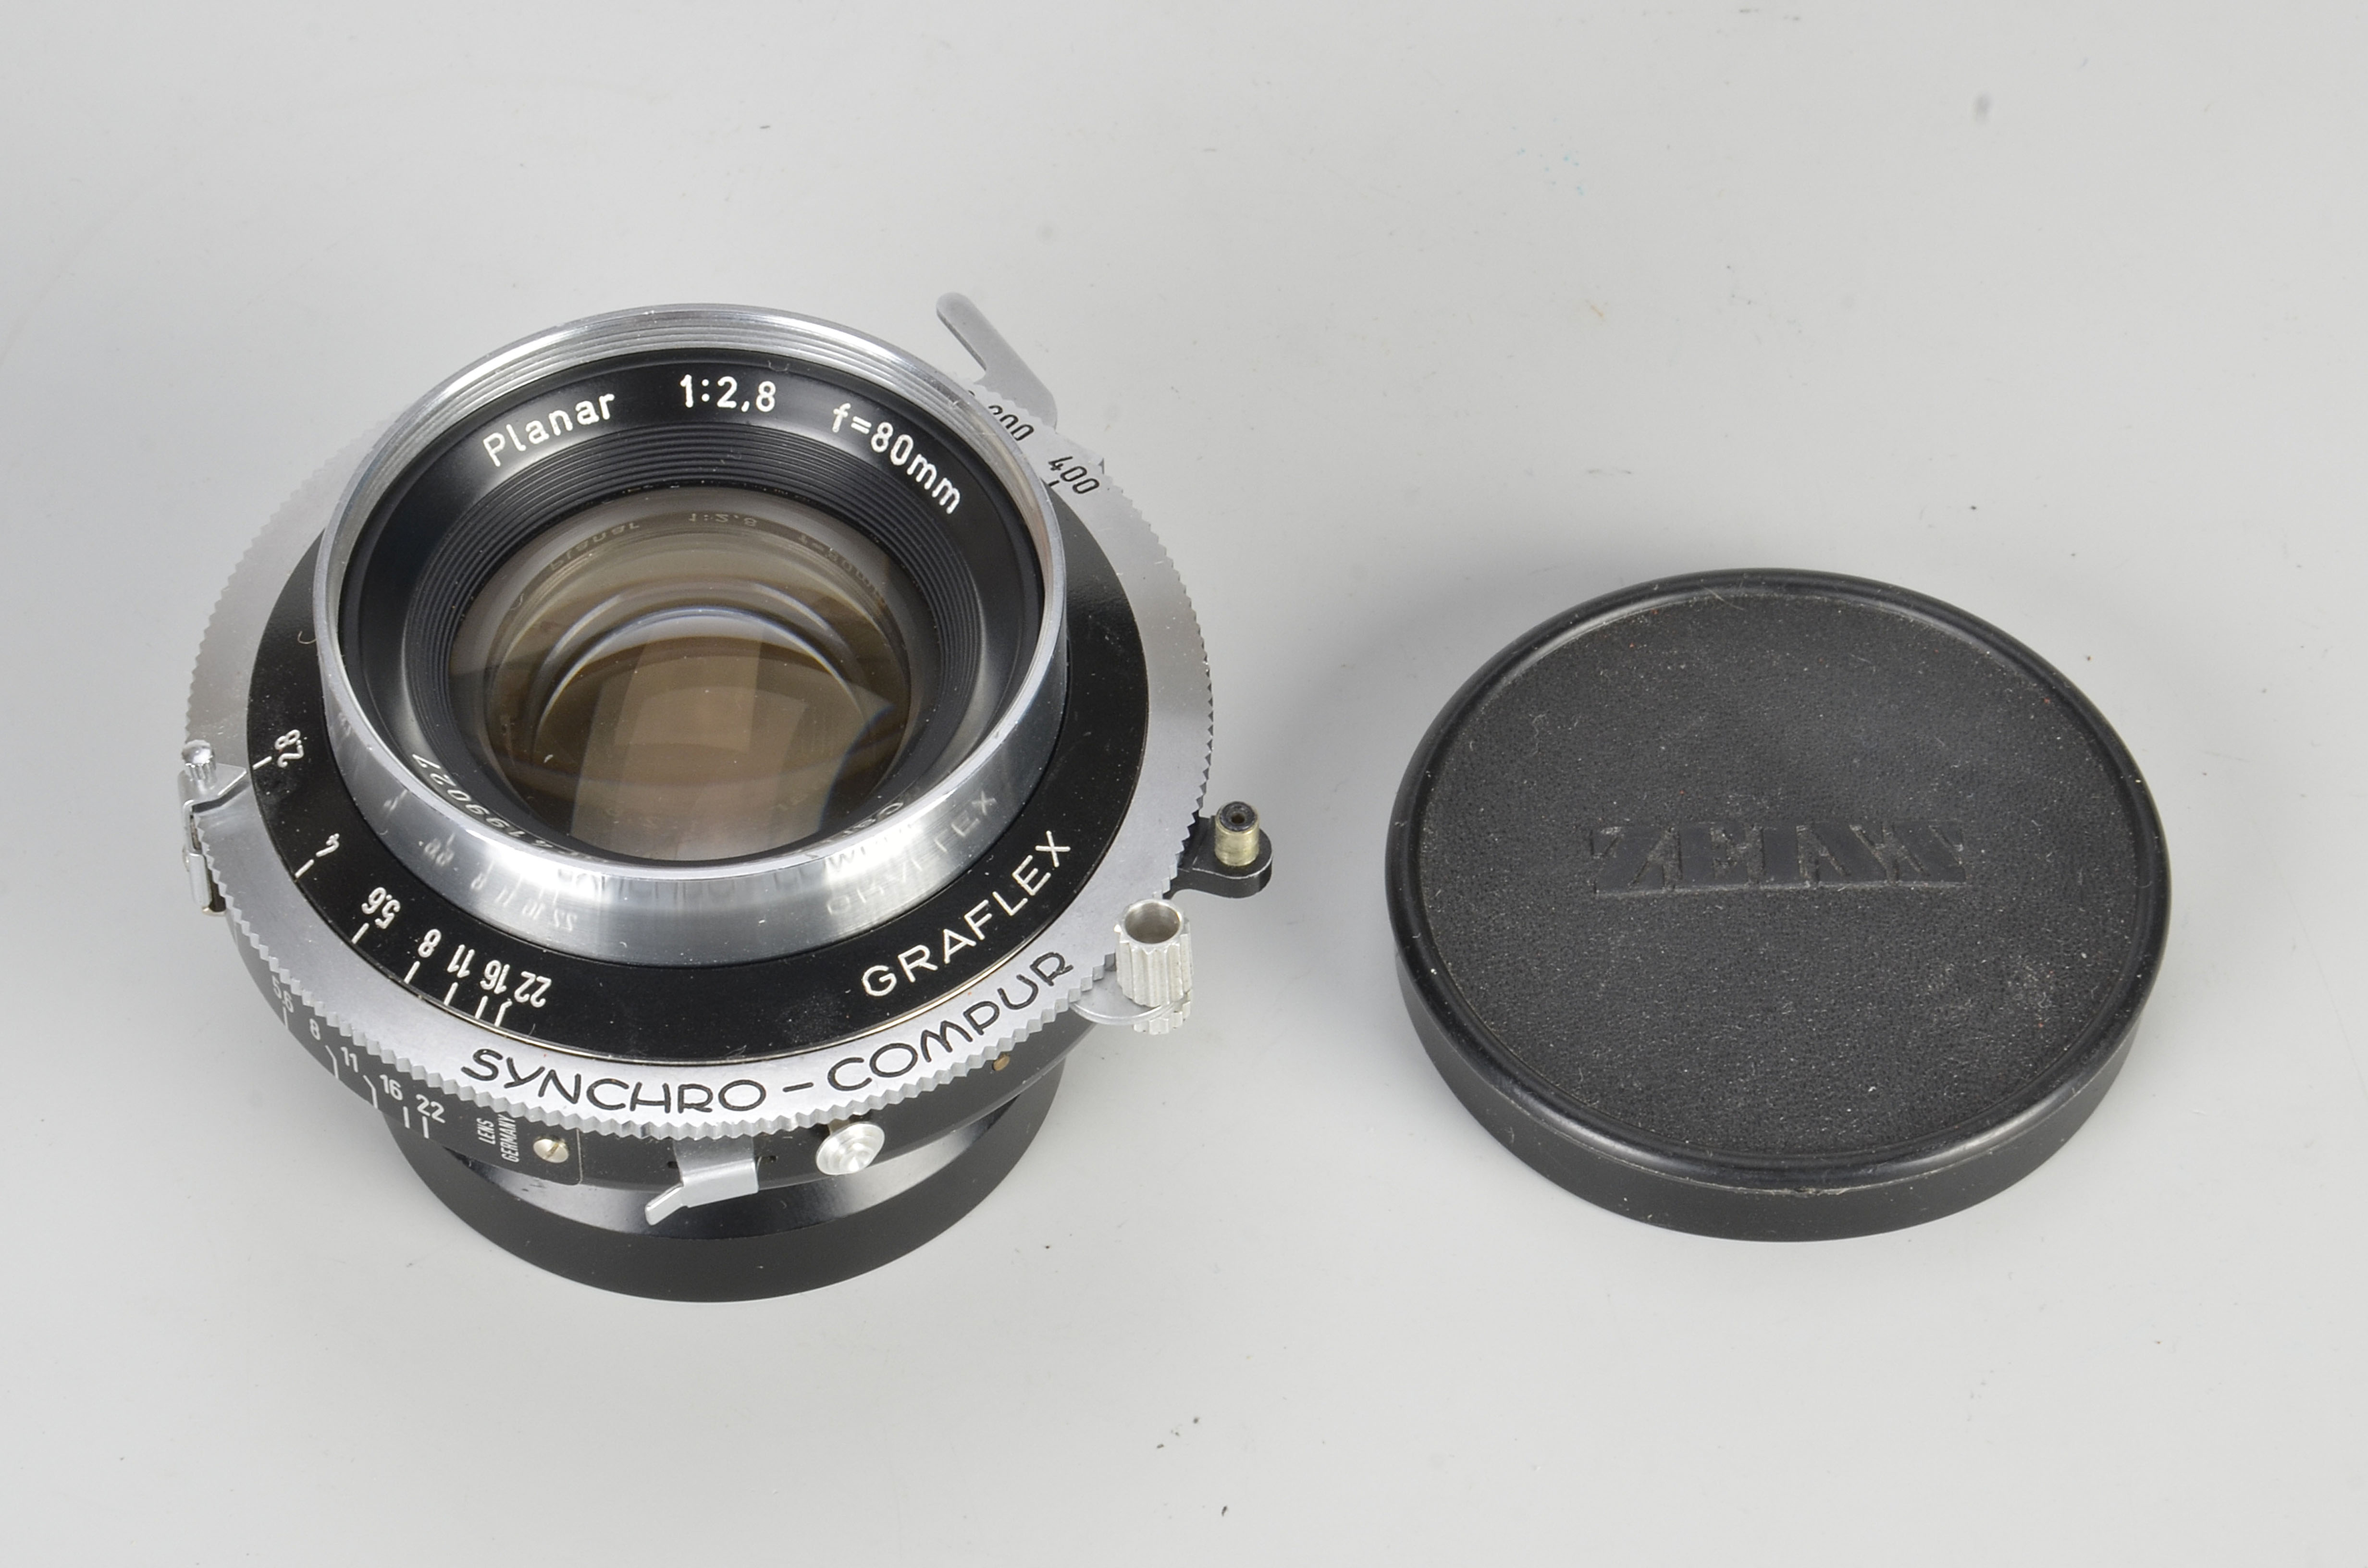 A Carl Zeiss Planar f/2.8 80mm Lens, serial no. 4199027, in Synchro-Compur shutter, body, VG,